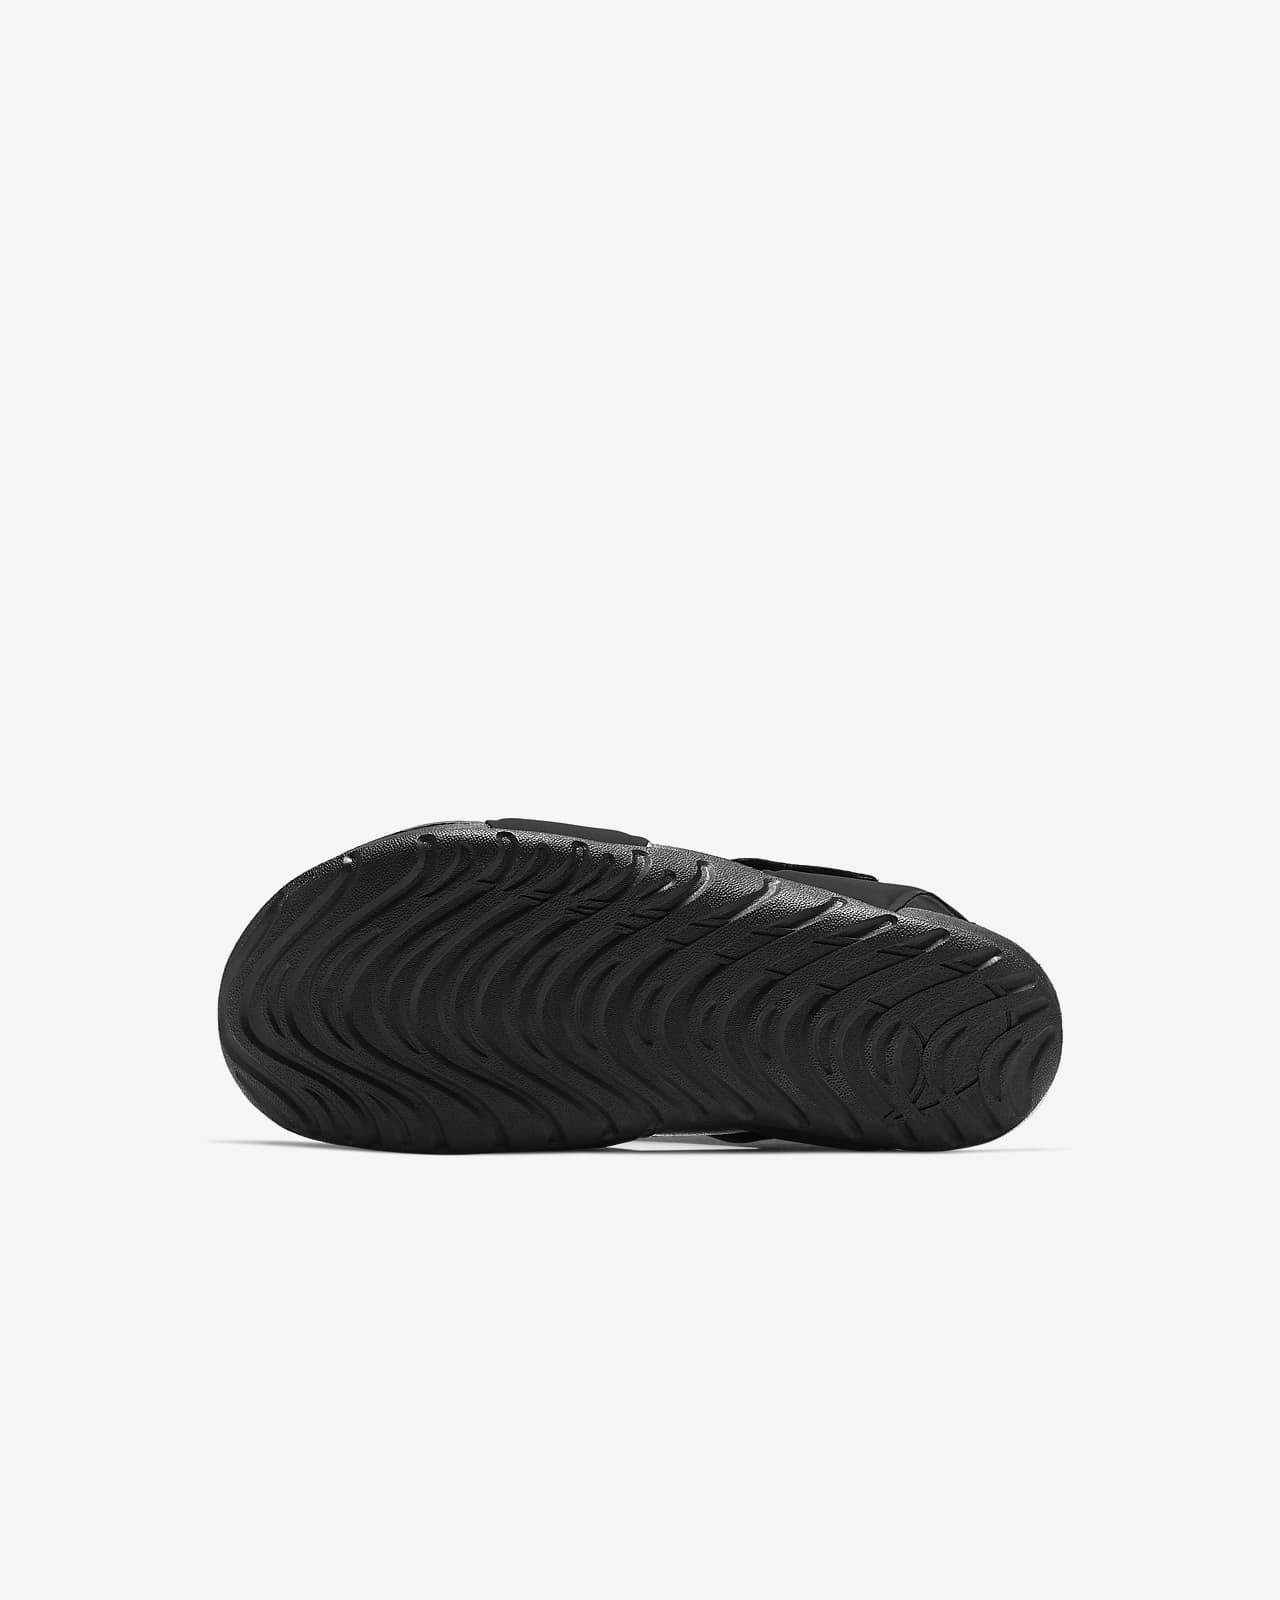 Nike公式 ナイキ サンレイ プロテクト 2 リトルキッズサンダル オンラインストア 通販サイト